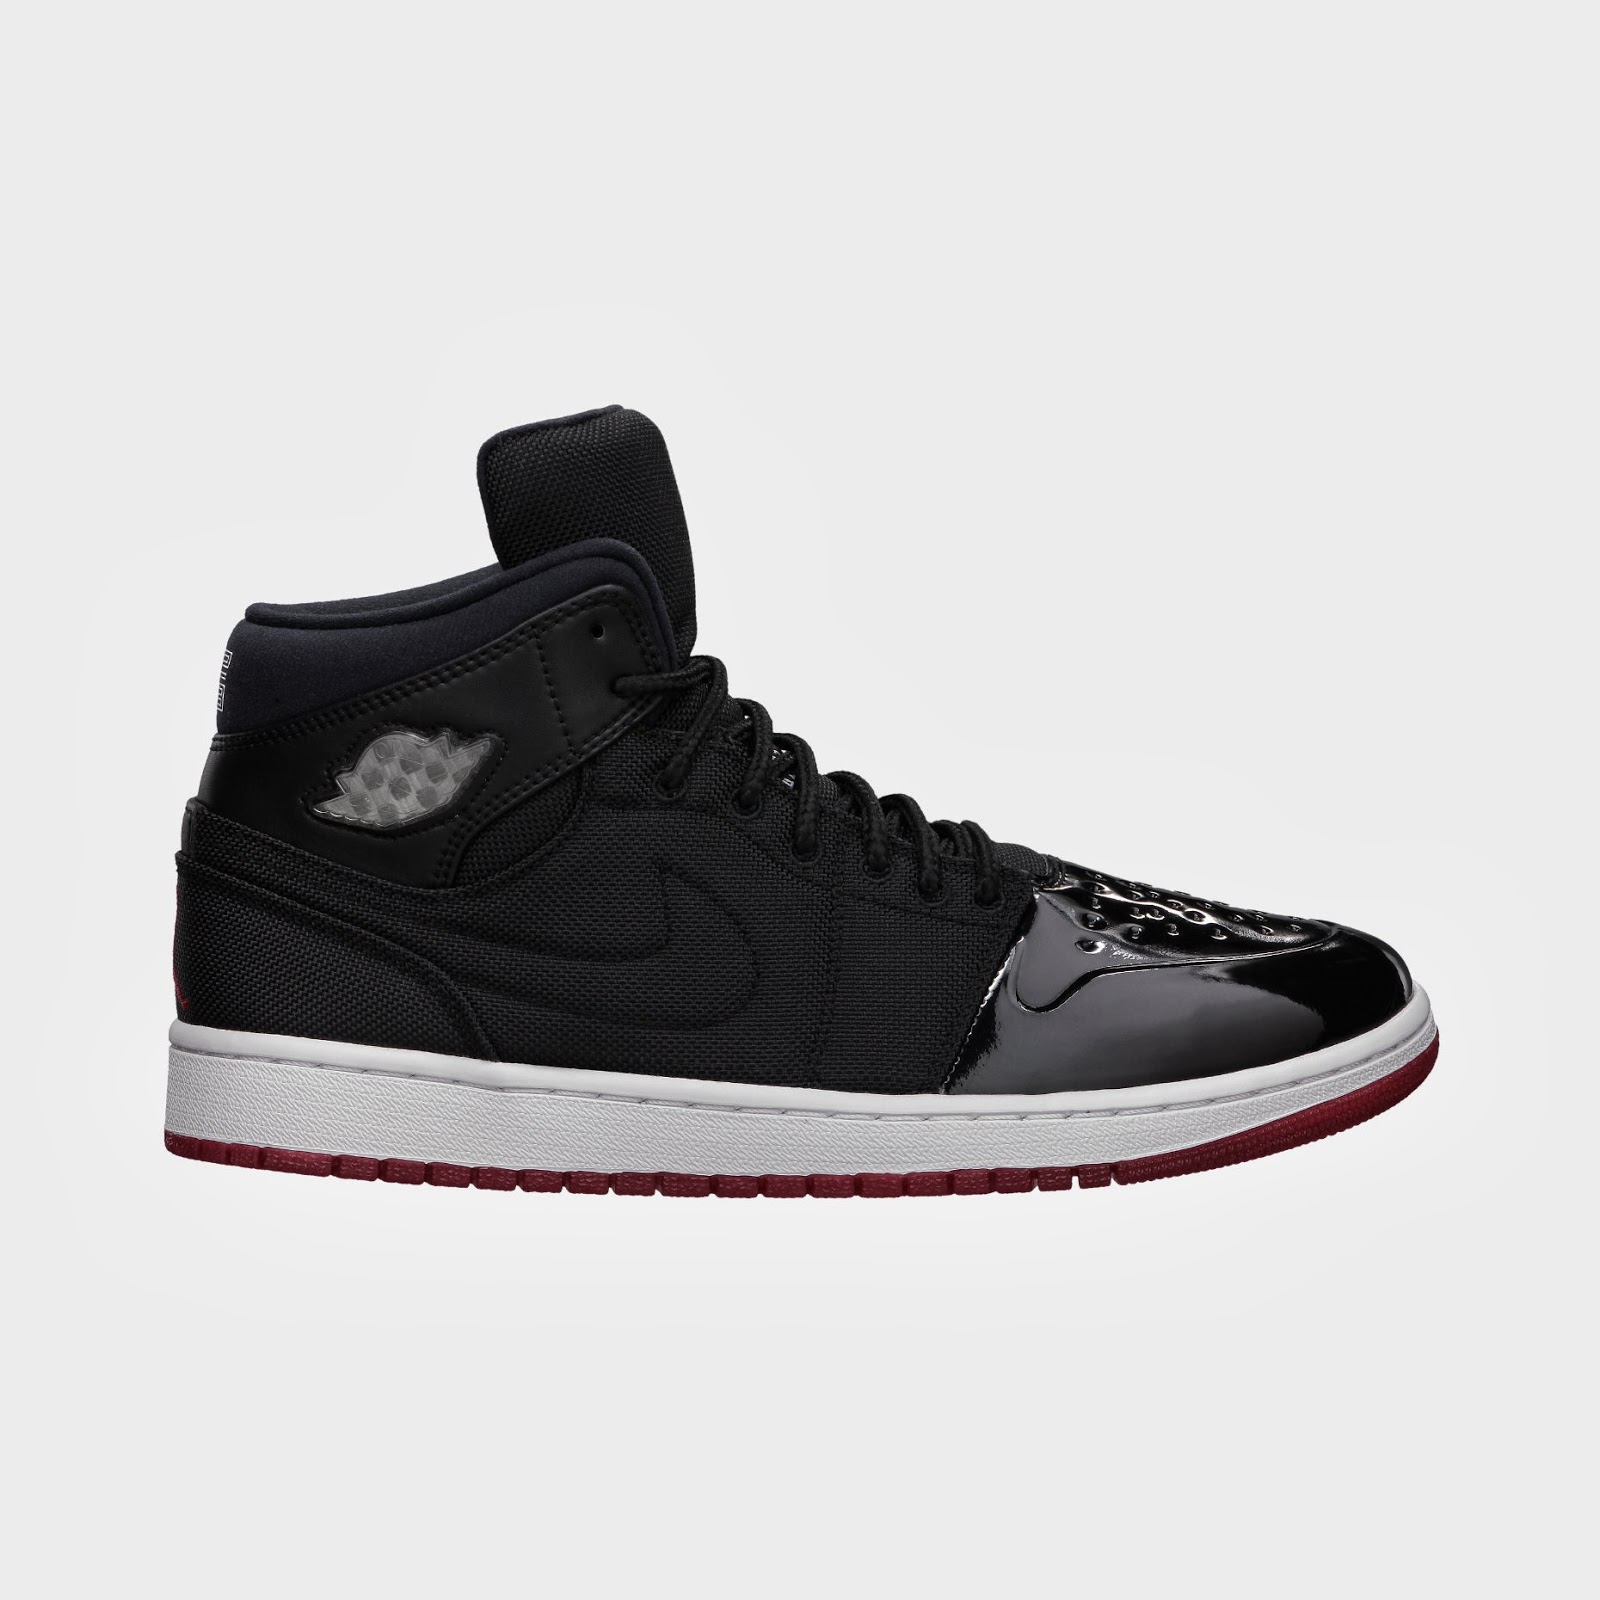  Nike  Air Jordan  Retro Basketball Shoes  and Sandals AIR 